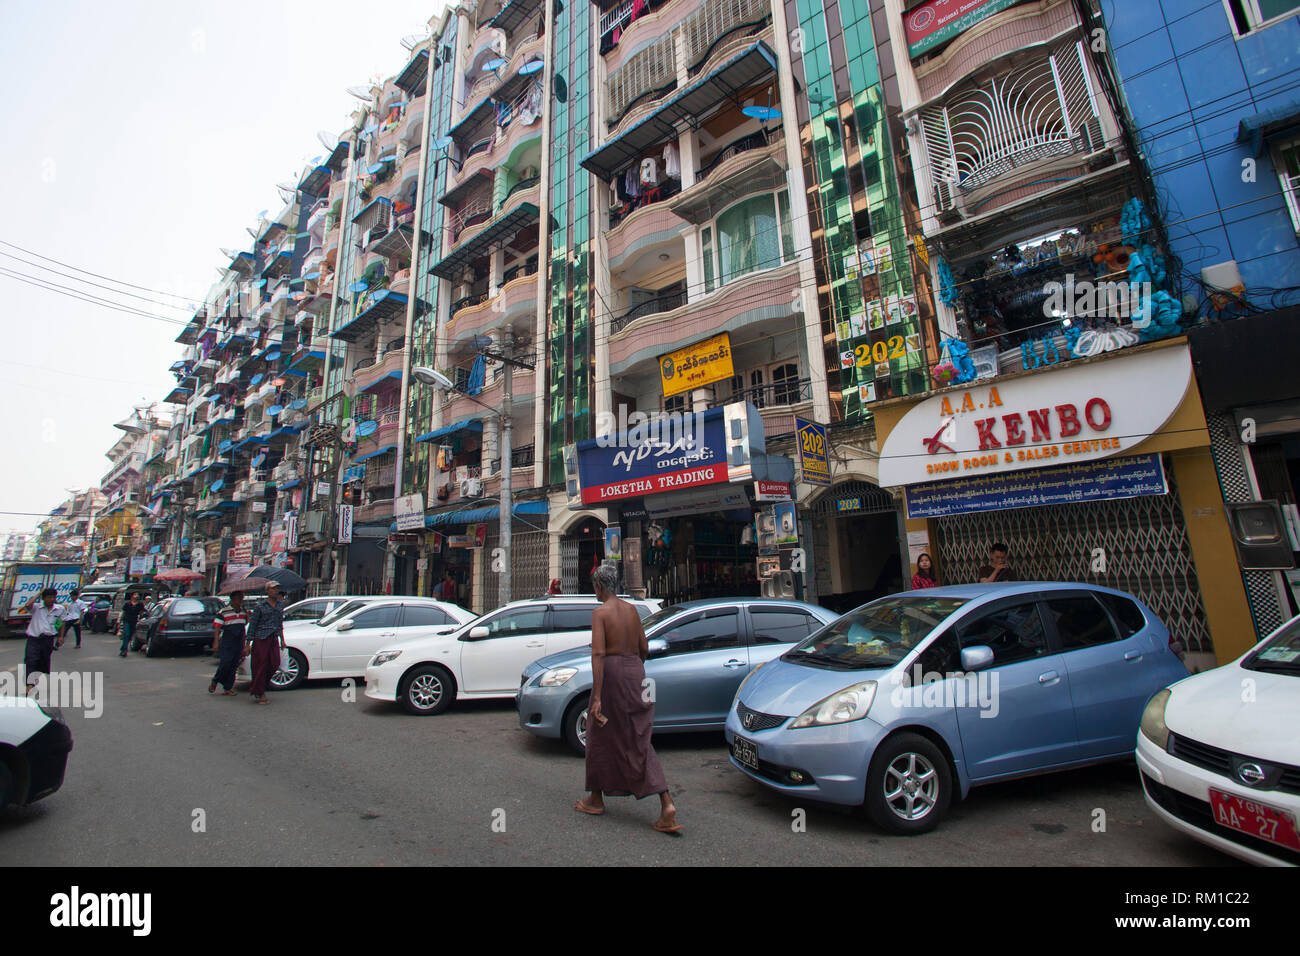 Daily life in Bo Soon Pat street, Sule Pagoda area, city center, Yangon, Myanmar, Asia Stock Photo